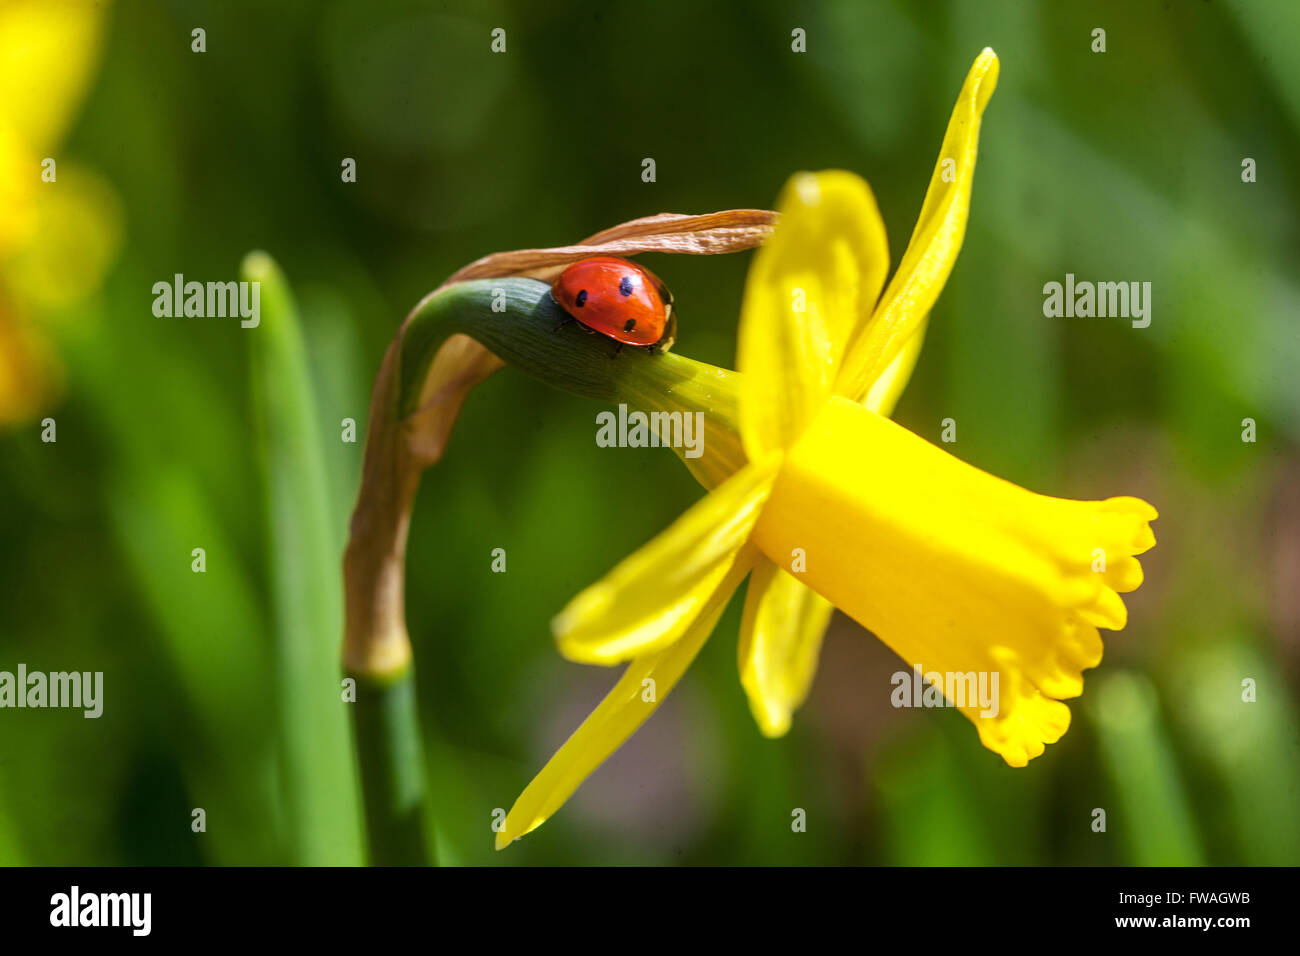 Yellow Daffodil Tete a Tete april garden ladybird April flower yellow ladybug Stock Photo